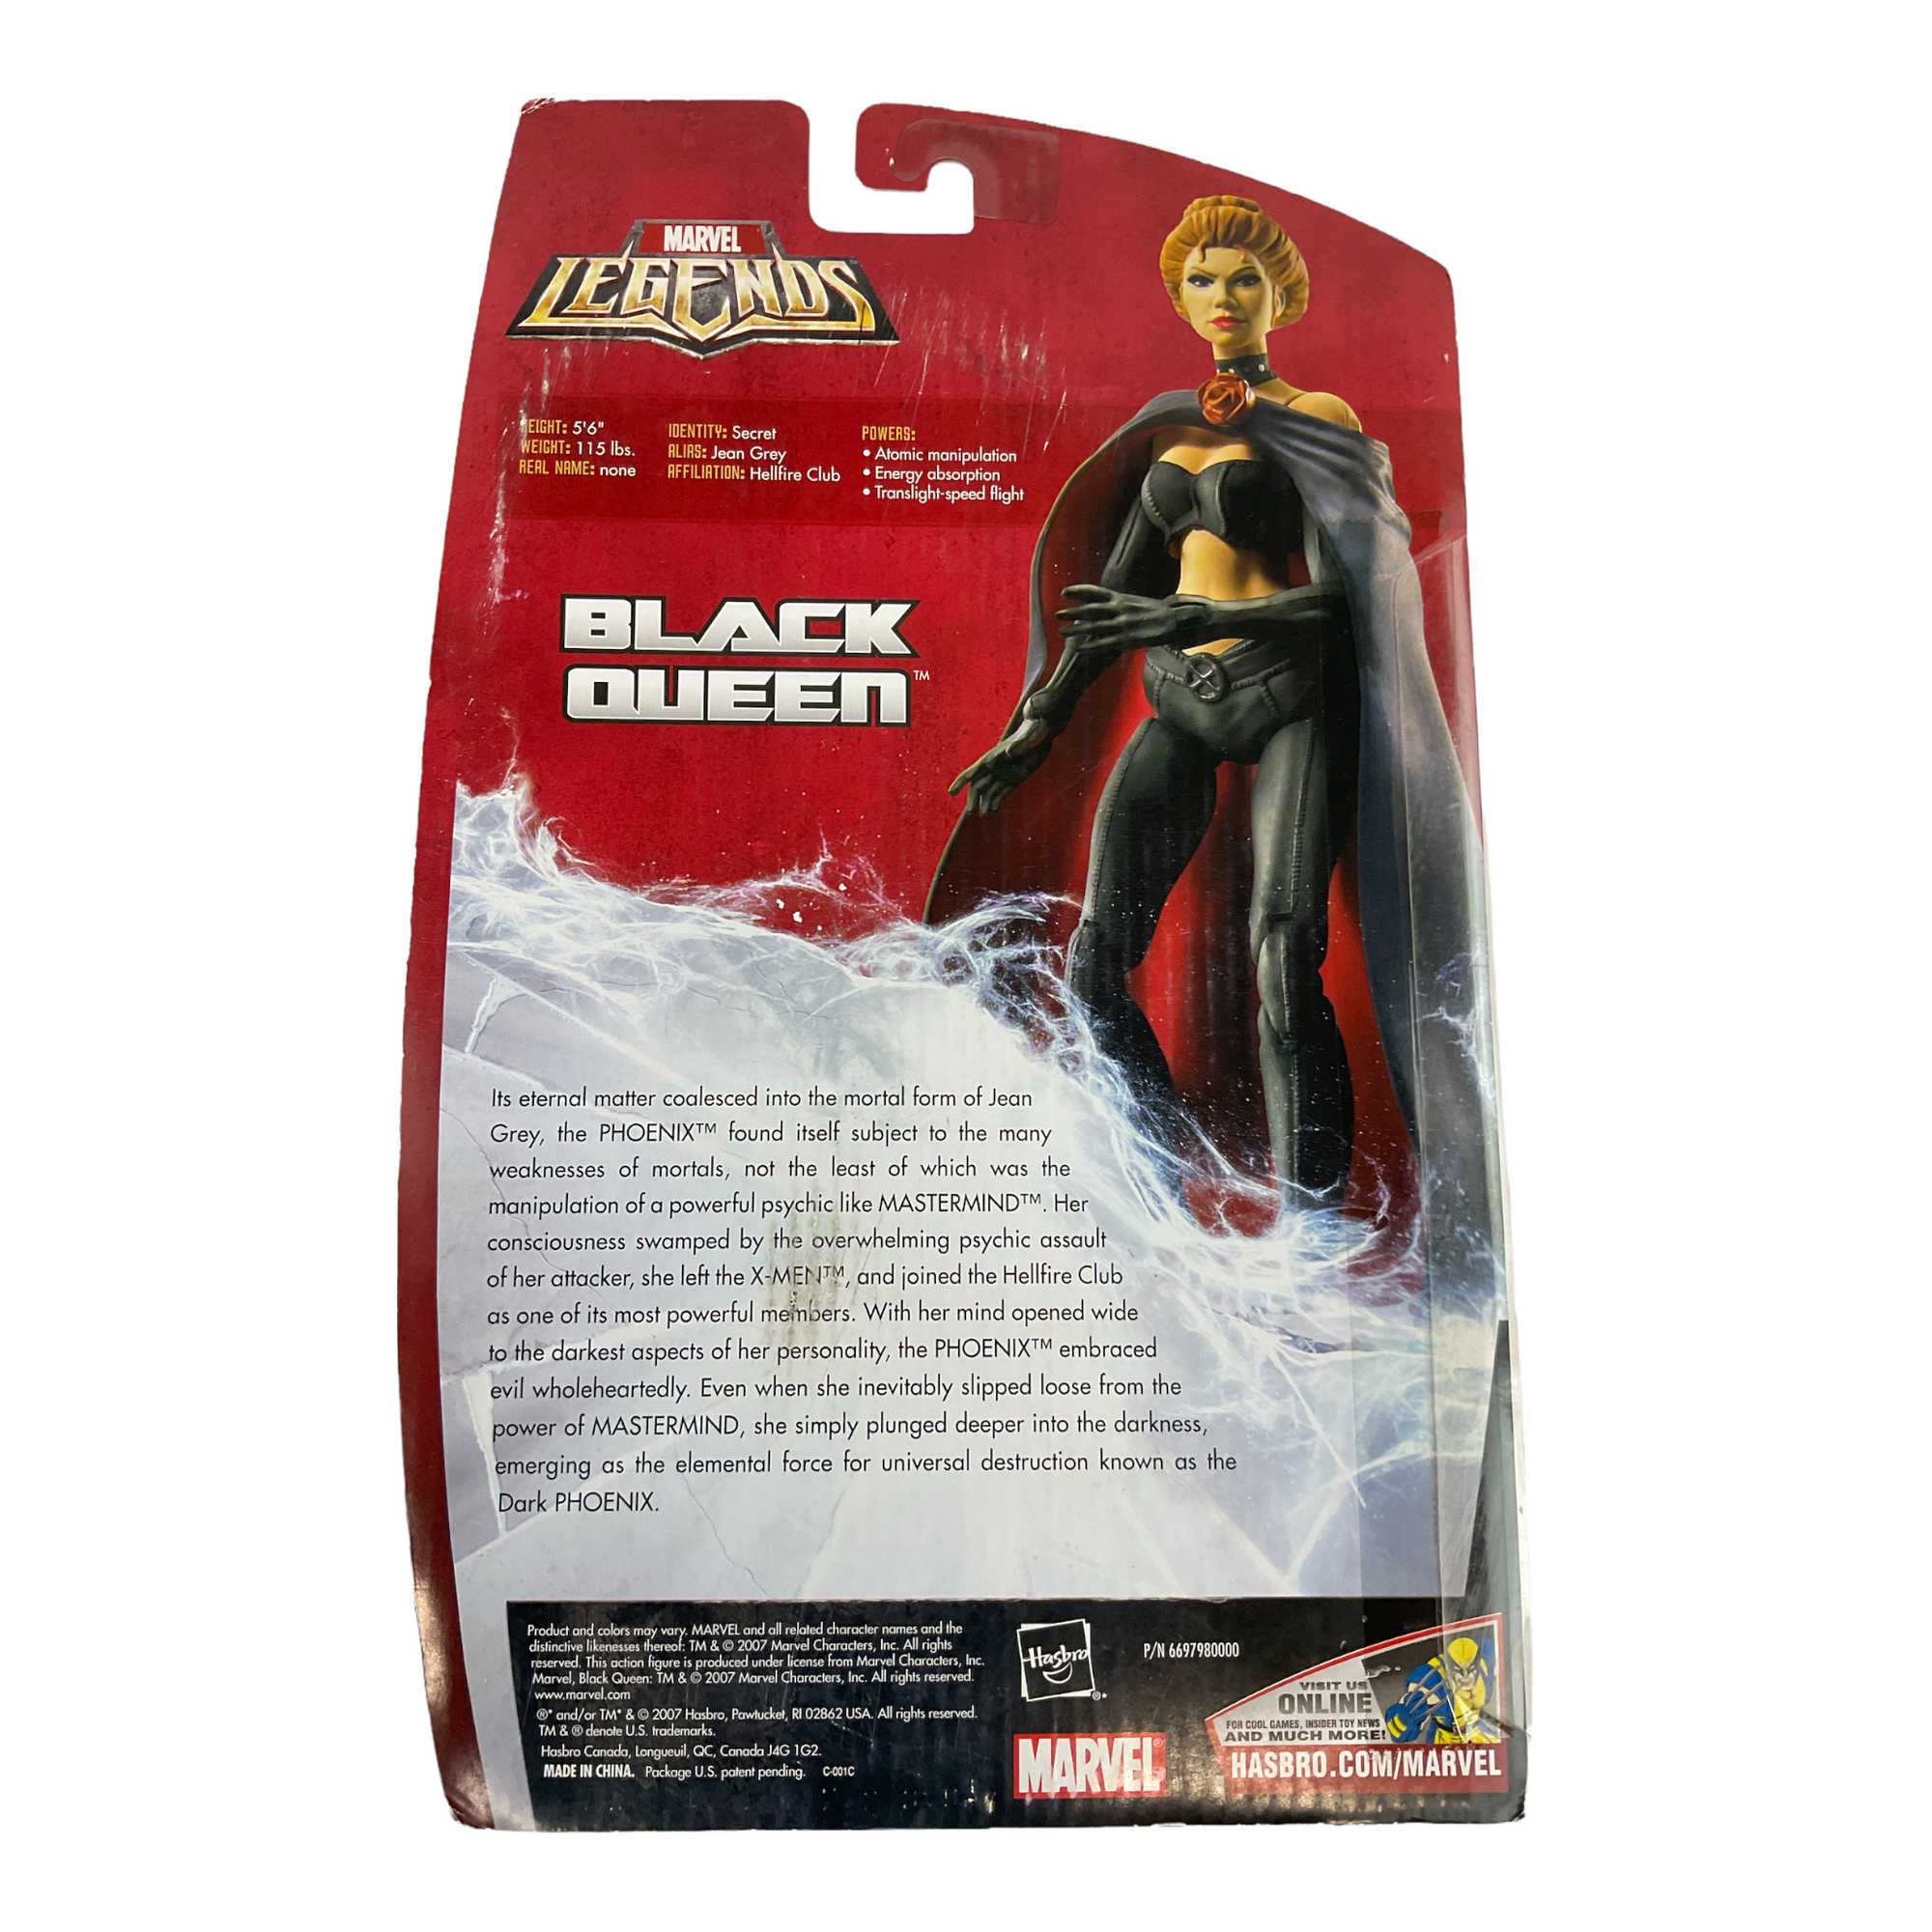 Marvel Legend Toysrus Exclusive Black Queen Action Figure